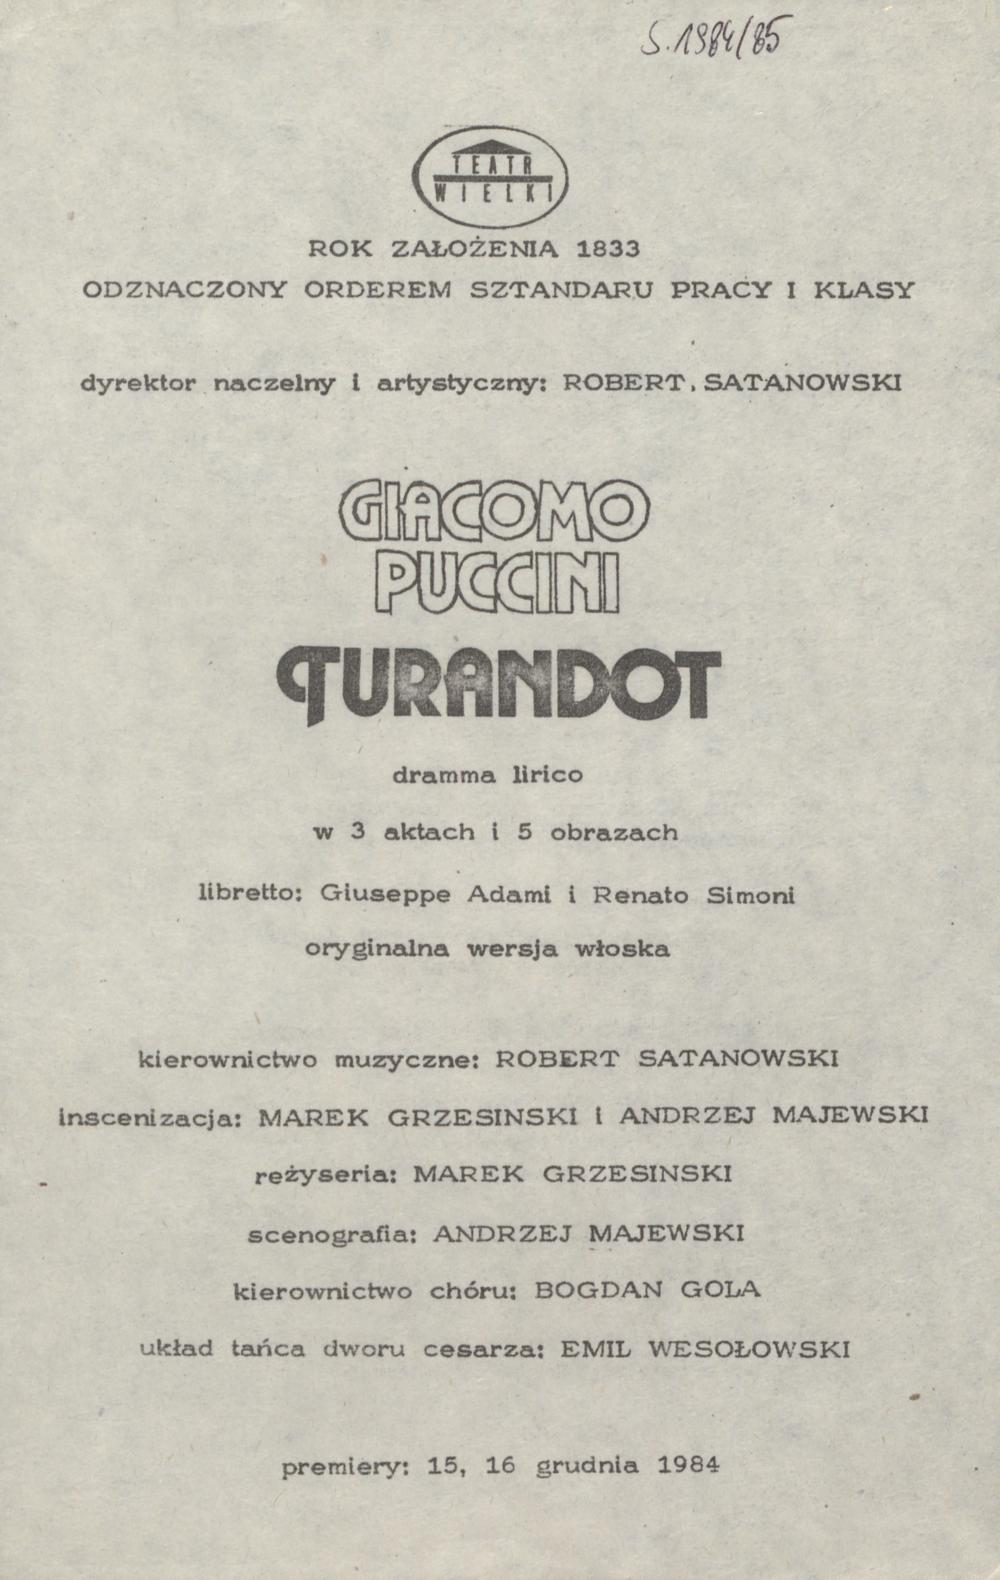 Wkładka obsadowa I Premiera „Turandot” Giacomo Puccini 15-12-1984